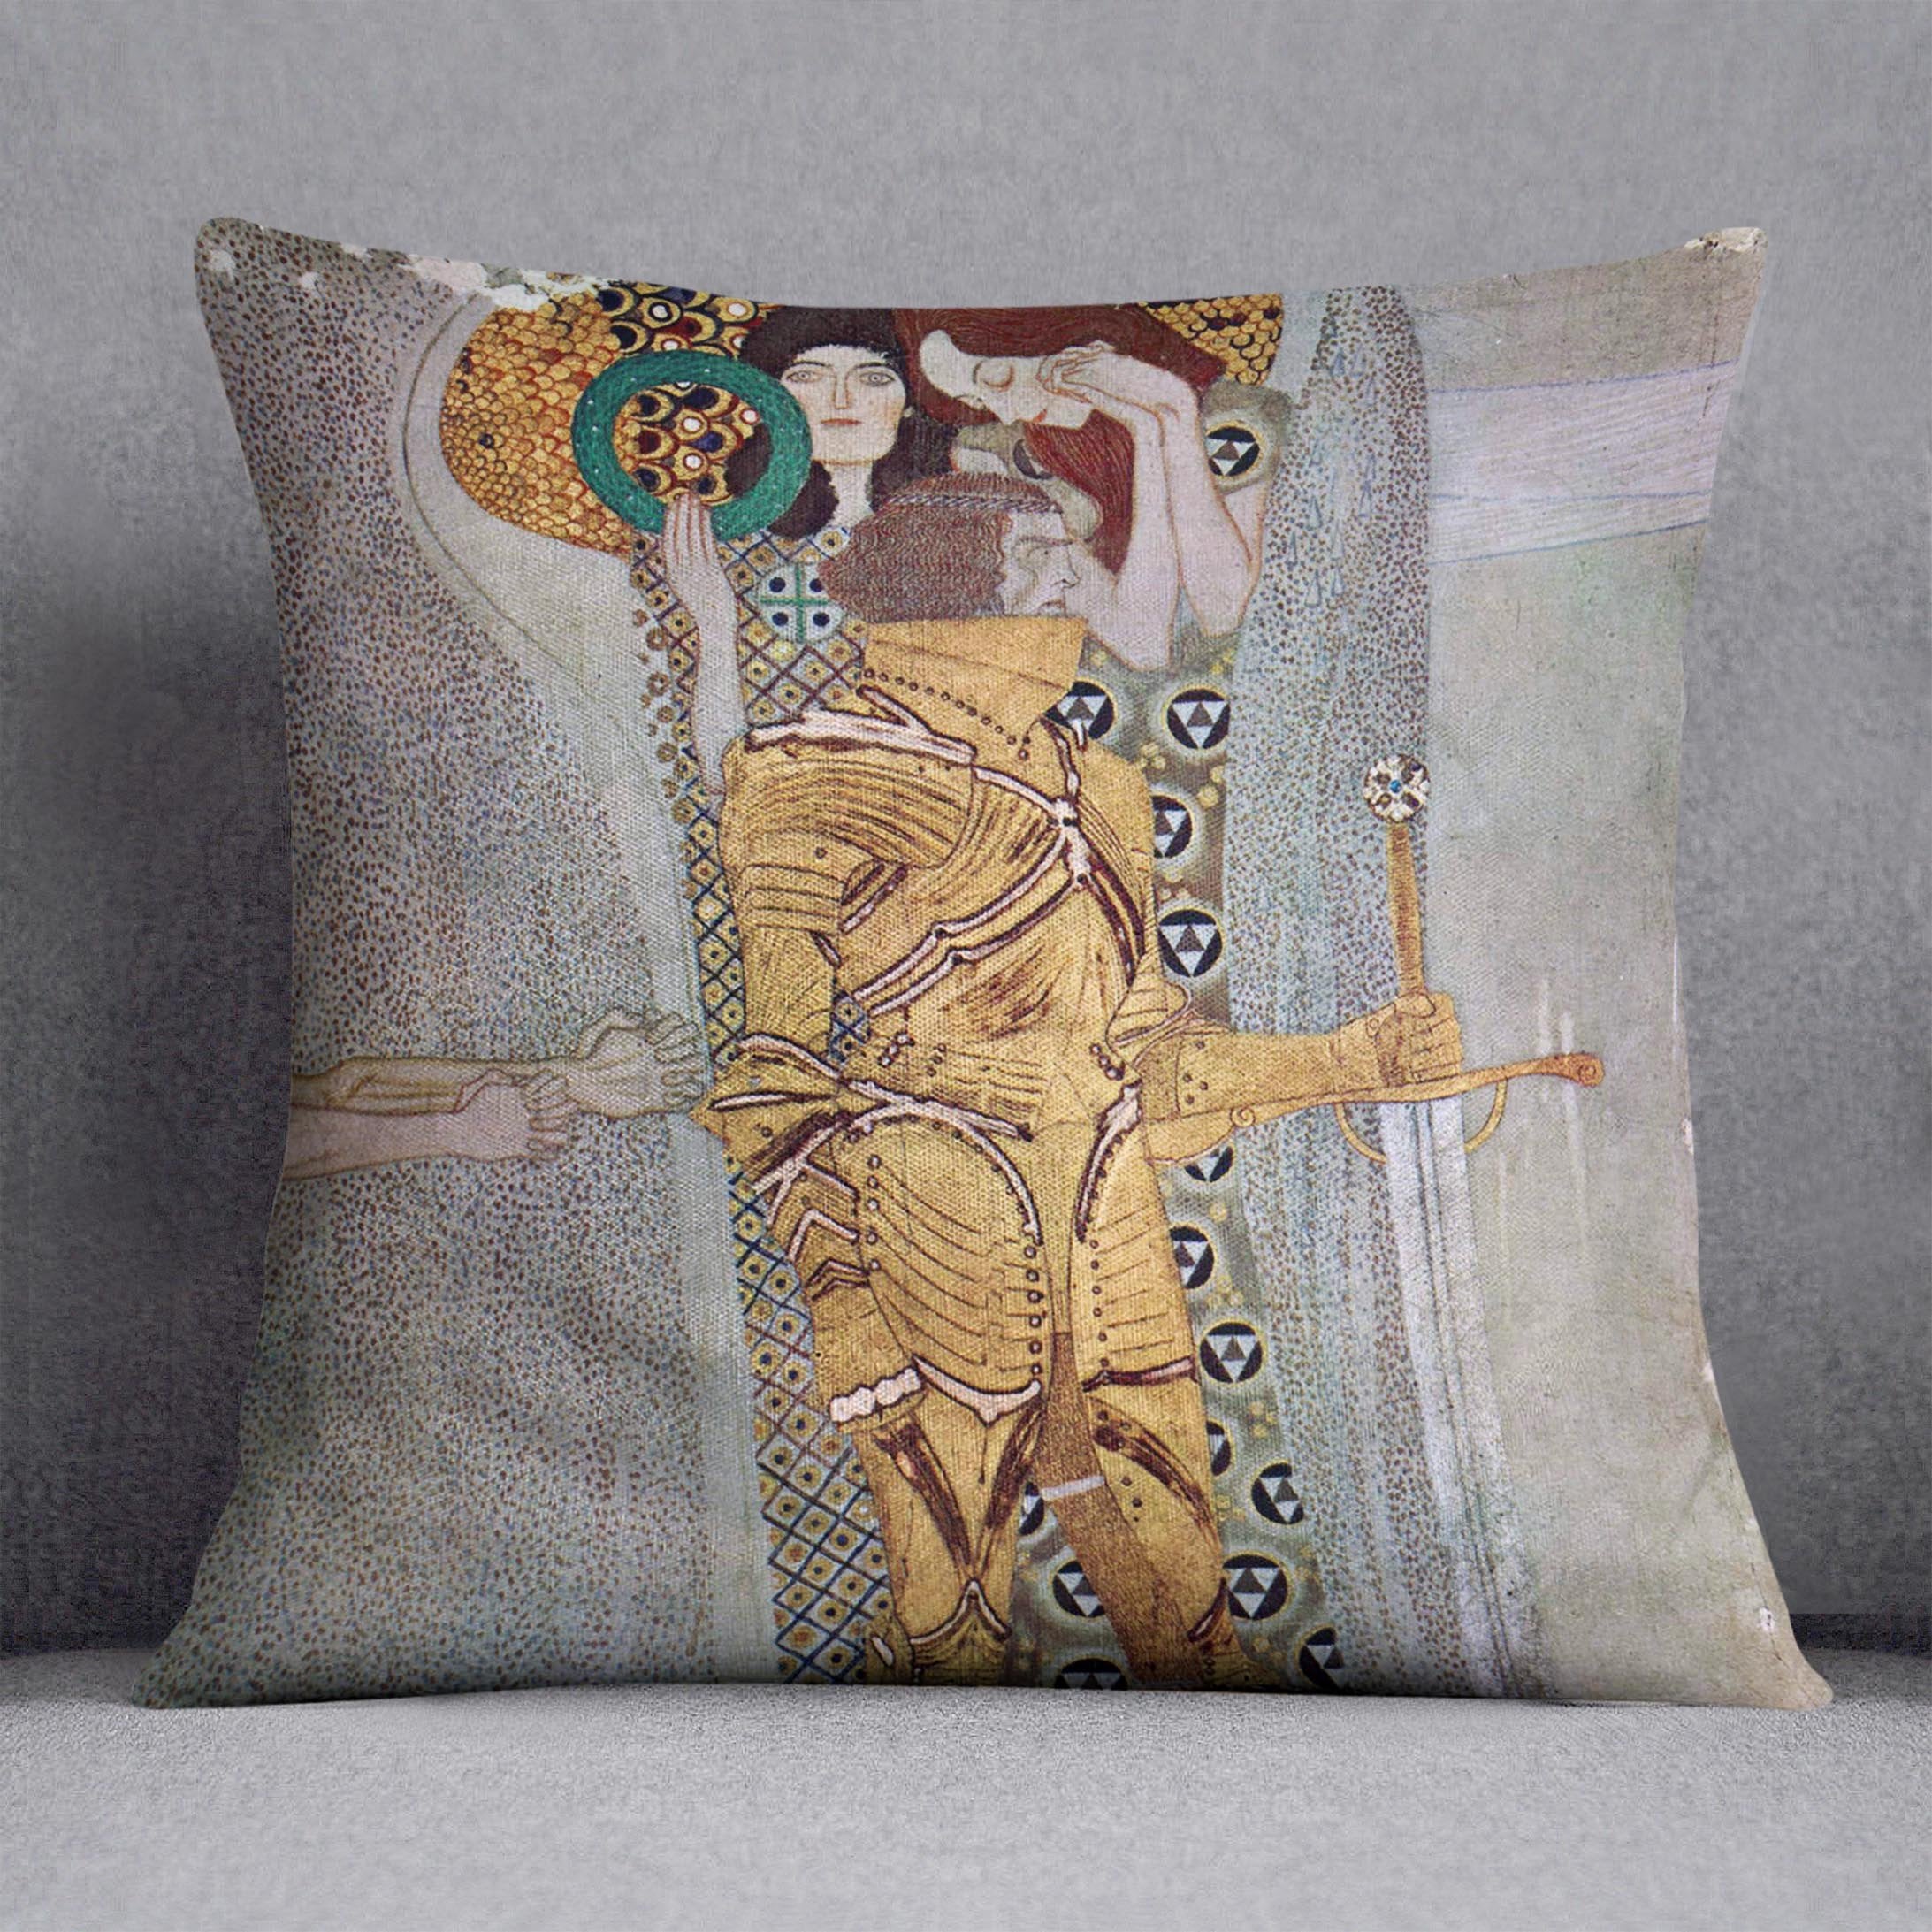 The Beethoven Freize by Klimt Throw Pillow